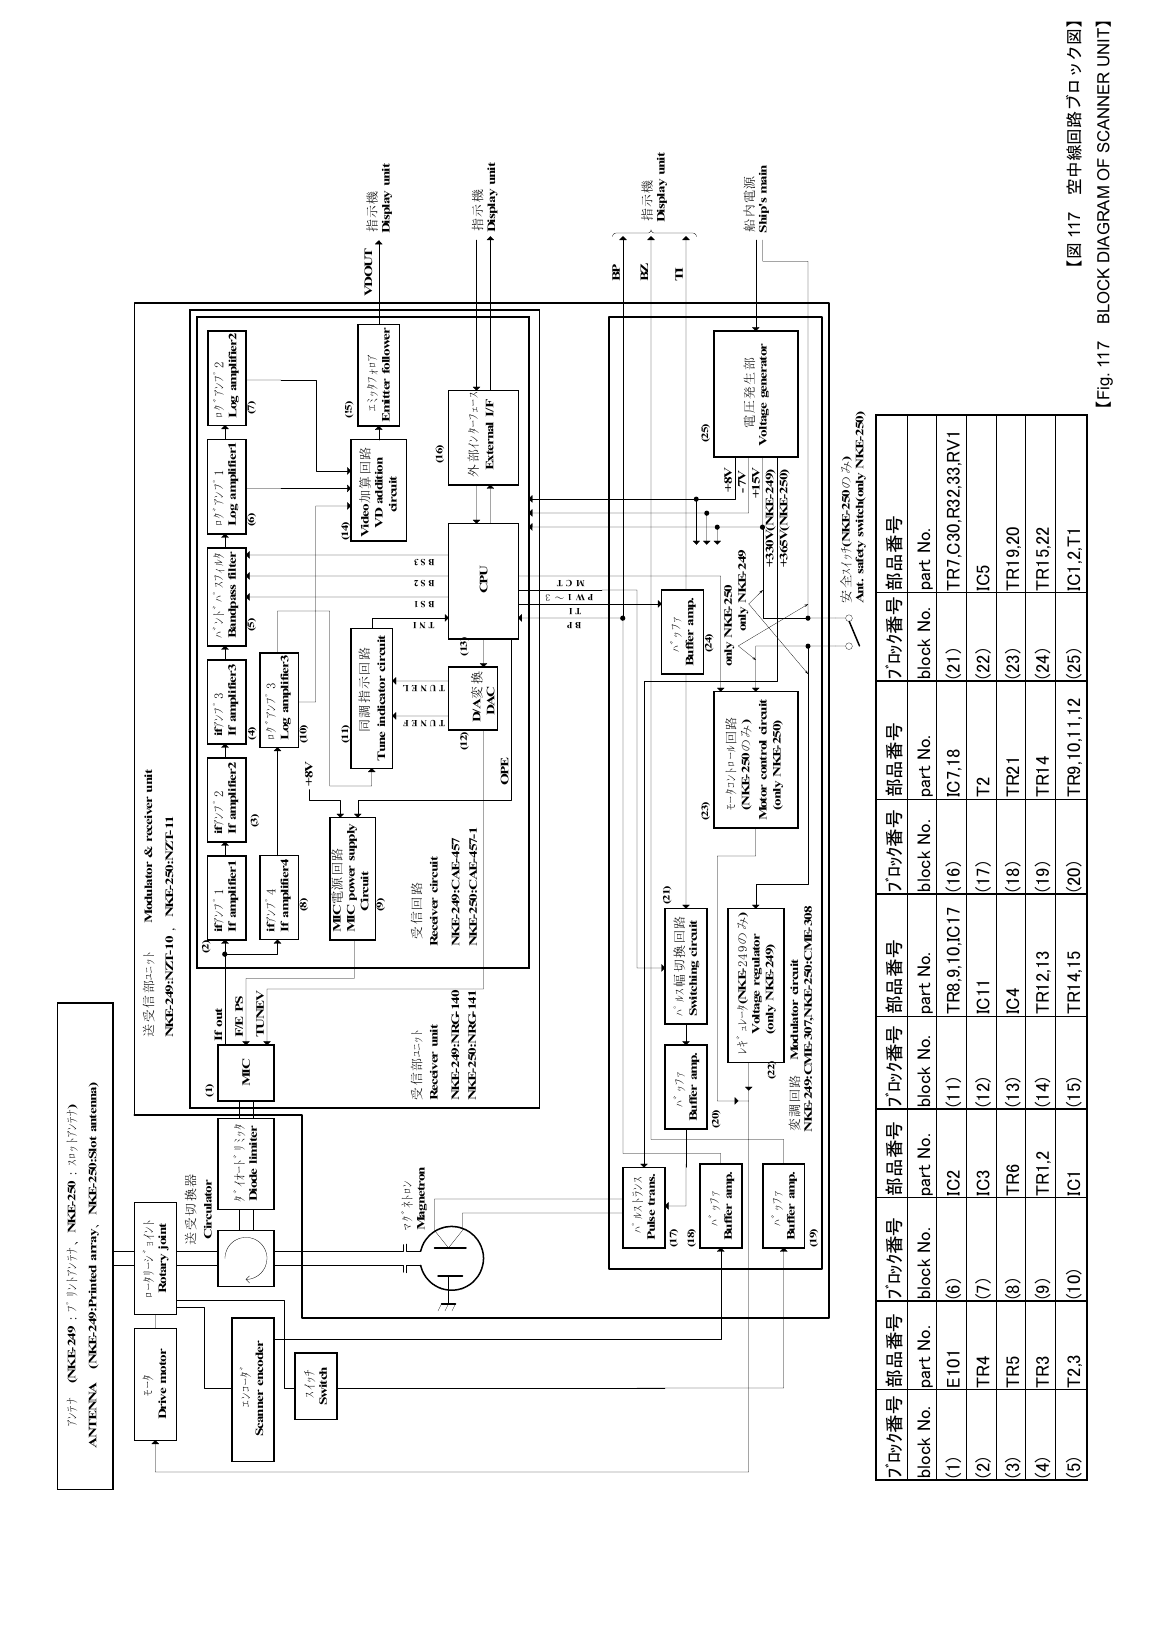 ｱﾝﾃﾅ(NKE-249：ﾌﾟﾘﾝﾄｱﾝﾃﾅ、NKE-250：ｽﾛｯﾄｱﾝﾃﾅ)ANTENNA (NKE- 249:Pri nted array、NKE- 250:Slot antenna)ﾛｰﾀﾘｰｼﾞｮｲﾝﾄRotary jointDrive motorﾓｰﾀｴﾝｺｰﾀﾞScanner encoderCirculator送受切換器ﾀﾞｲｵｰﾄﾞﾘﾐｯﾀDiode l imiter MICIf out ifｱﾝﾌﾟ1If amplifier1ifｱﾝﾌﾟ2If amplifier2ifｱﾝﾌﾟ3If amplifier3ﾊﾞﾝﾄﾞﾊﾟｽﾌｨﾙﾀBandpass filterﾛｸﾞｱﾝﾌﾟ1Log amplifier1ﾛｸﾞｱﾝﾌﾟ2Log amplifier2Video加算回路VD additionifｱﾝﾌﾟ4If amplifier4ﾛｸﾞｱﾝﾌﾟ3Log amplifier3ｴﾐｯﾀﾌｫﾛｱEmitter followerVDOUT指示機Display unitTune indicator circuit同調指示回路CPUD/A変換DAC外部ｲﾝﾀｰﾌｪｰｽExternal I/F受信回路Receiver circuitNKE- 249:CAE-457NKE- 250:CAE-457- 1指示機Display unitTUNEFTUNELTNIBS1BS2BS3circuit受信部ﾕﾆｯﾄReceiver unitNKE- 249:NRG- 140NKE- 250:NRG- 141ｽｲｯﾁSwitchﾏｸﾞﾈﾄﾛﾝMagnetronﾊﾟﾙｽﾄﾗﾝｽPulse trans.BPTIPW 1～3ﾊﾞｯﾌｧBuffer amp.ﾊﾟﾙｽ幅切換回路Switching circuitﾊﾞｯﾌｧBuffer amp.ﾊﾞｯﾌｧBuffer amp.船内電源Ship&apos;s main電圧発生部Voltage generatorﾓｰﾀｺﾝﾄﾛｰﾙ回路Motor control circuit(NKE- 250のみ)(only NKE-250)MCT安全ｽｲｯﾁ(NKE-250のみ)Ant. safety switch(only NKE-250)ﾚｷﾞｭﾚｰﾀ(NKE-249のみ)Voltage regulator(only NKE- 249)+8V-7V+15V+330V(NKE- 249)+365V(NKE- 250)only NKE-249only NKE-250指示機Display unitBPBZﾊﾞｯﾌｧBuffer amp.TI変調回路Modulator circuitNKE- 249:CME- 307,NKE- 250:CME- 308送受信部ﾕﾆｯﾄModulator &amp; receiver unitNKE- 249:NZT-10,NKE- 250:NZT-11MIC電源回路MIC power supplyCircuitOPE+8VF/E PSTUNEV(1) (2)(3) (4) (5) (6) (7)(8)(9)(10)(11)(12) (13)(14) (!5)(16)(17)(18)(19)(20)(21)(22)(23) (24) (25) 【図 117 空中線回路ブロック図】 【Fig. 117    BLOCK DIAGRAM OF SCANNER UNIT】 ﾌﾞﾛｯｸ番号 部品番号 ﾌﾞﾛｯｸ番号 部品番号 ﾌﾞﾛｯｸ番号 部品番号 ﾌﾞﾛｯｸ番号 部品番号 ﾌﾞﾛｯｸ番号 部品番号 block No.  part No.  block No.  part No.  block No.  part No.  block No.  part No.  block No.  part No. (1) E101 (6)  IC2  (11) TR8,9,10,IC17 (16) IC7,18 (21) TR7,C30,R32,33,RV1 (2) TR4 (7)  IC3 (12) IC11 (17) T2  (22) IC5 (3)  TR5 (8)  TR6 (13) IC4  (18) TR21 (23) TR19,20 (4) TR3 (9)  TR1,2 (14) TR12,13 (19) TR14 (24) TR15,22 (5) T2,3 (10) IC1 (15) TR14,15 (20)  TR9,10,11,12 (25)  IC1,2,T1 